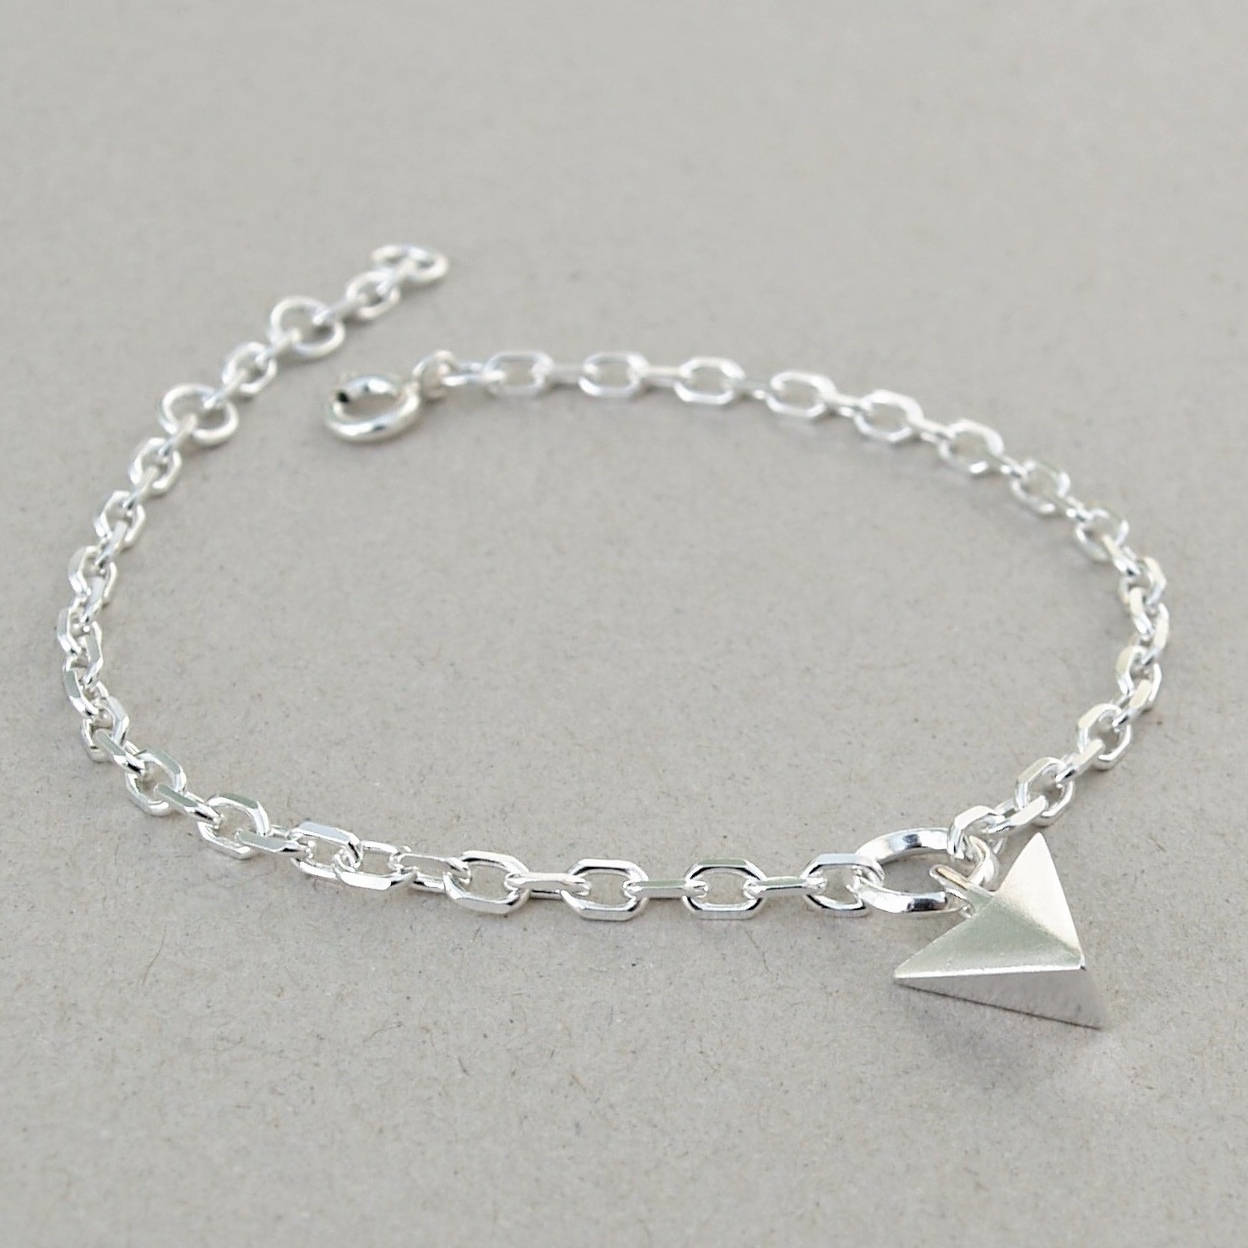 Oxidised or polished solid silver arrow 3mm wide diamond cut trace chain charm bracelet